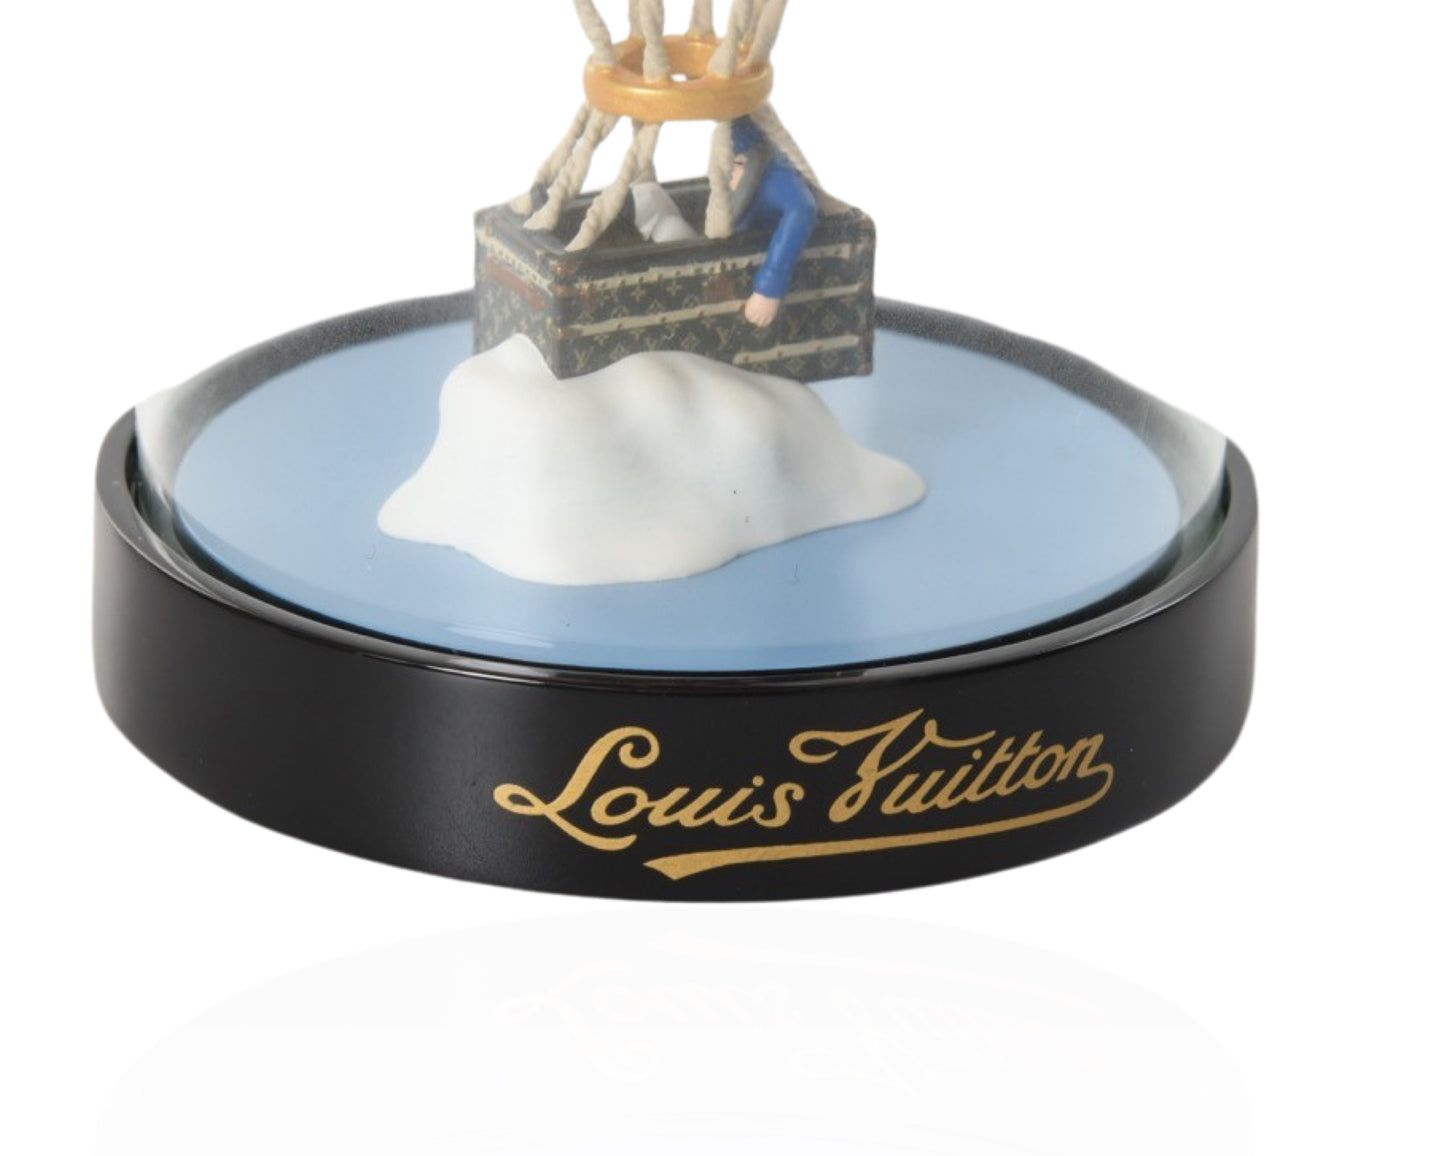 Louis Vuitton Rare Snow Globe Novelty Object Figurine Paper Weight Air Balloon